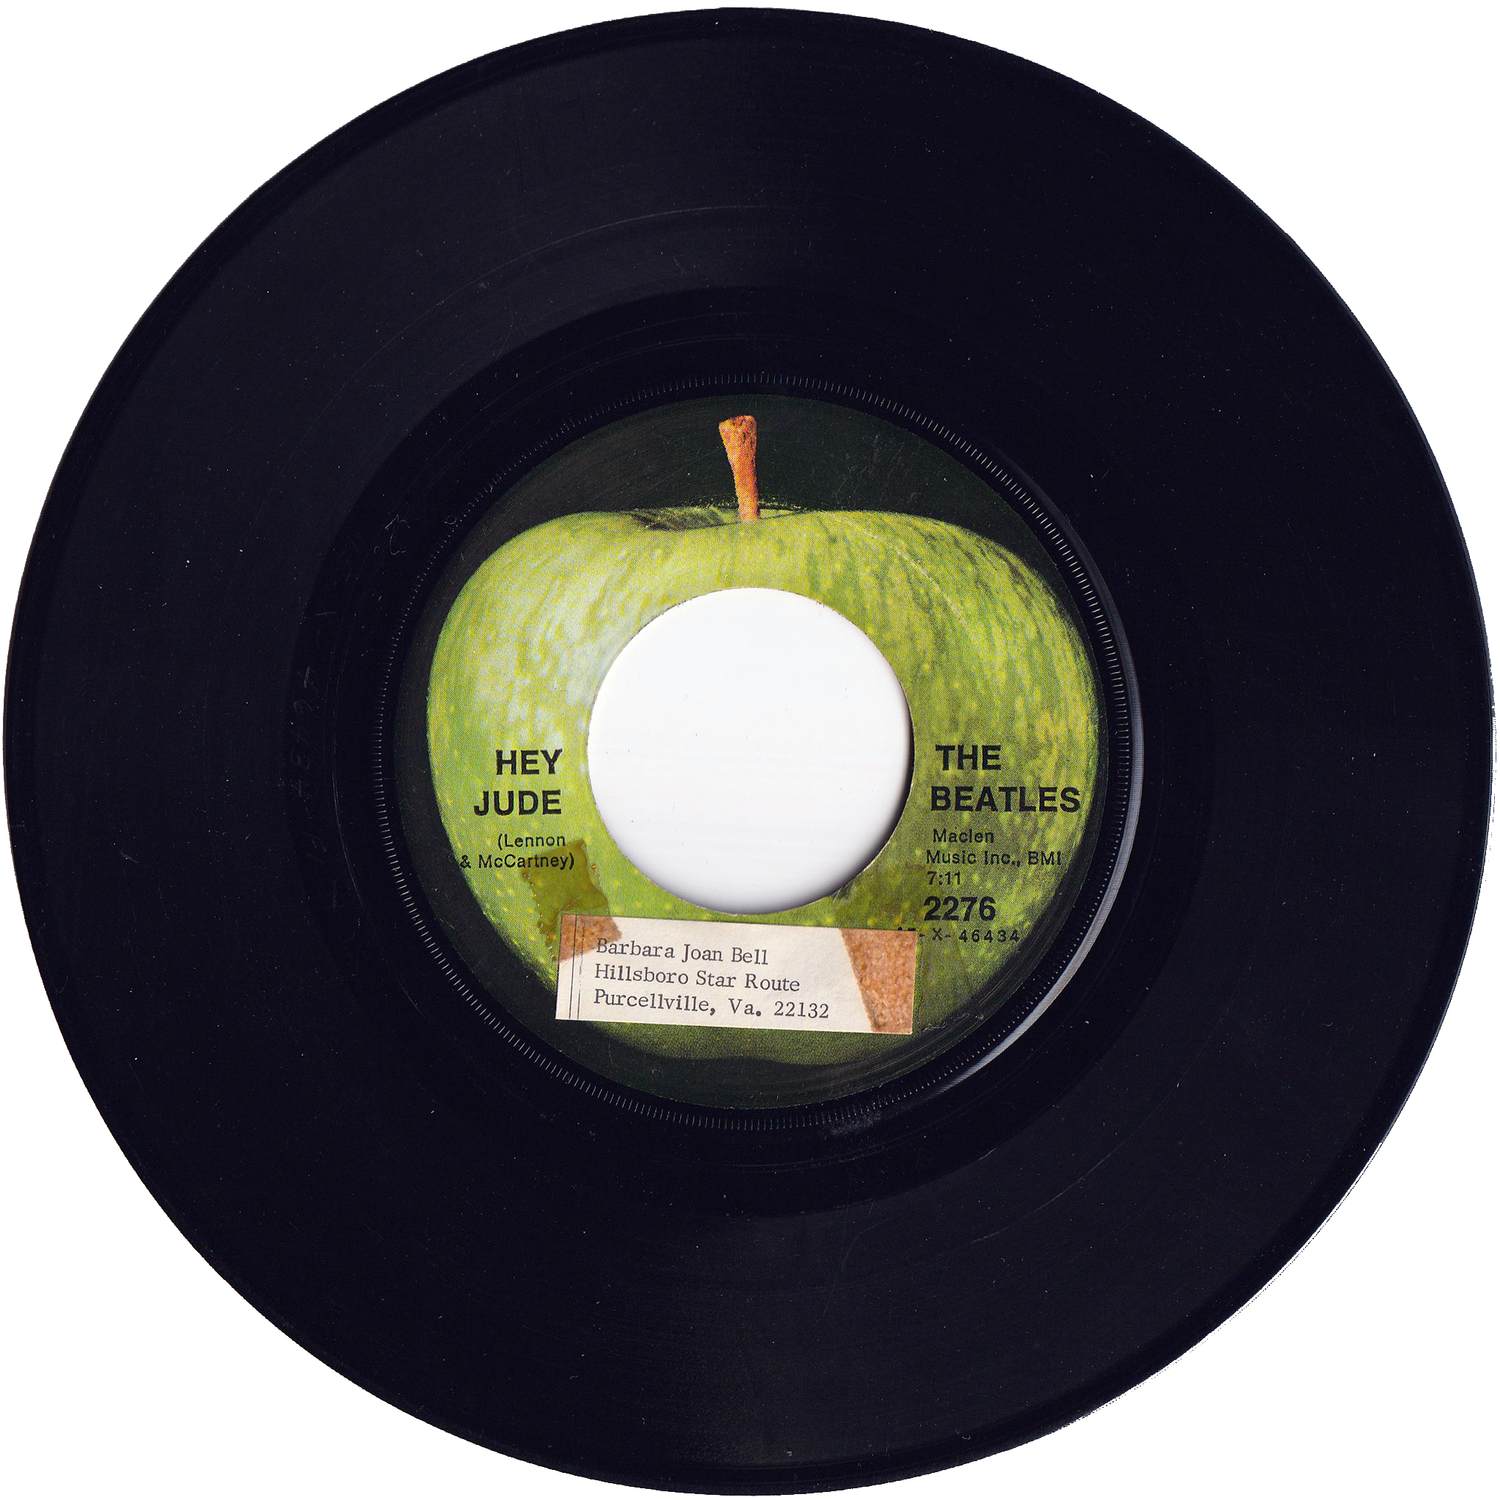 The Beatles - Hey Jude / Revolution – NIGHT BEAT RECORDS